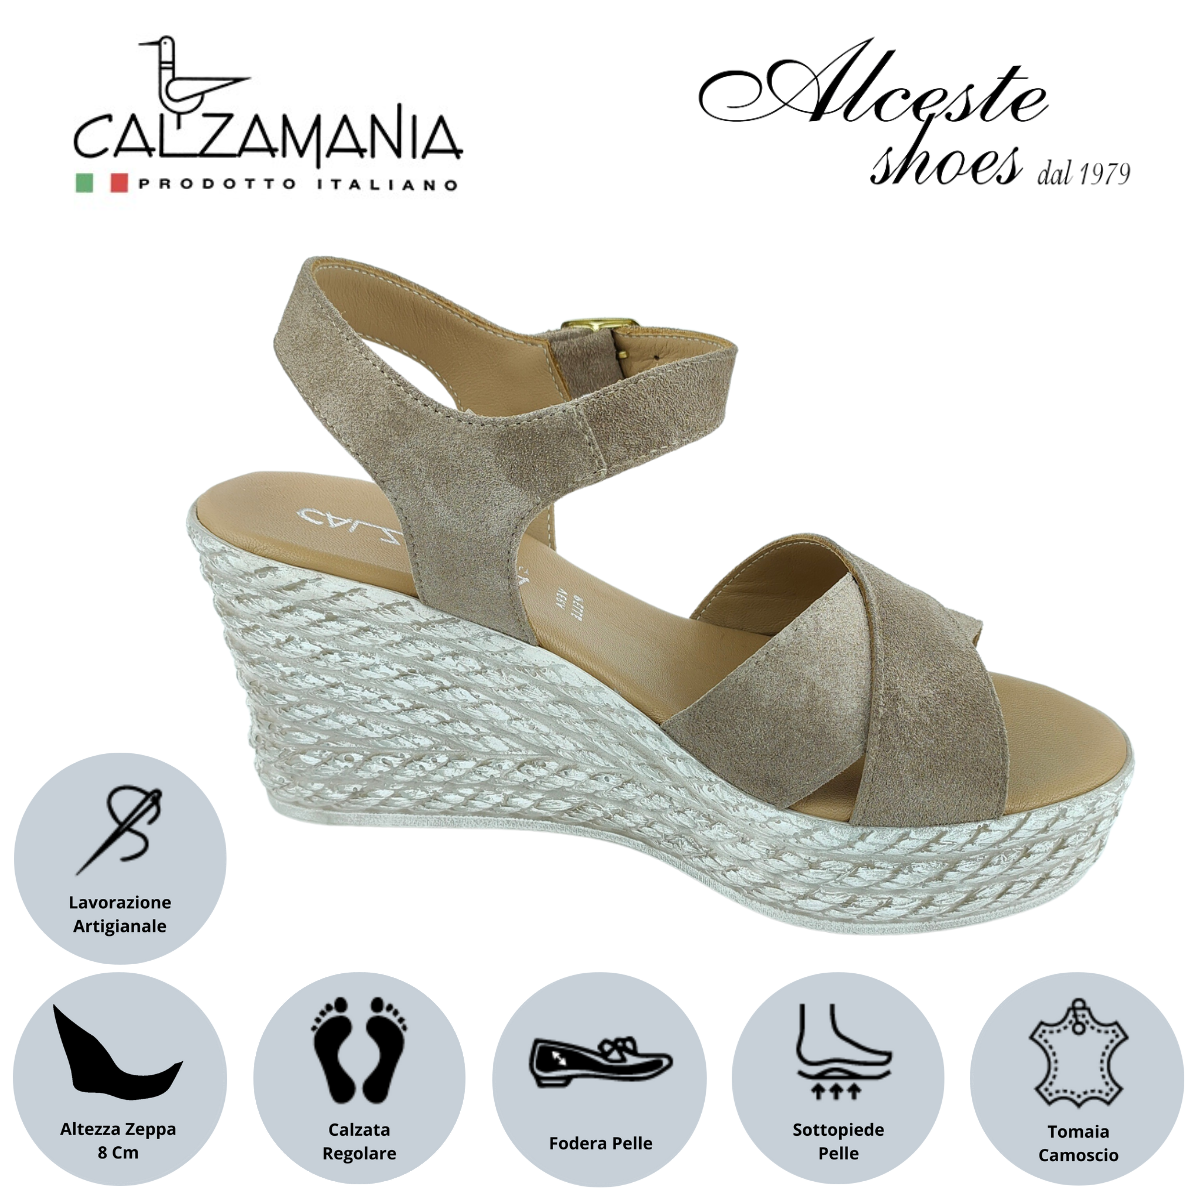 Sandalo con Zeppa "Calzamania" Art. 3037 Camoscio Tortora Alceste Shoes 3 9